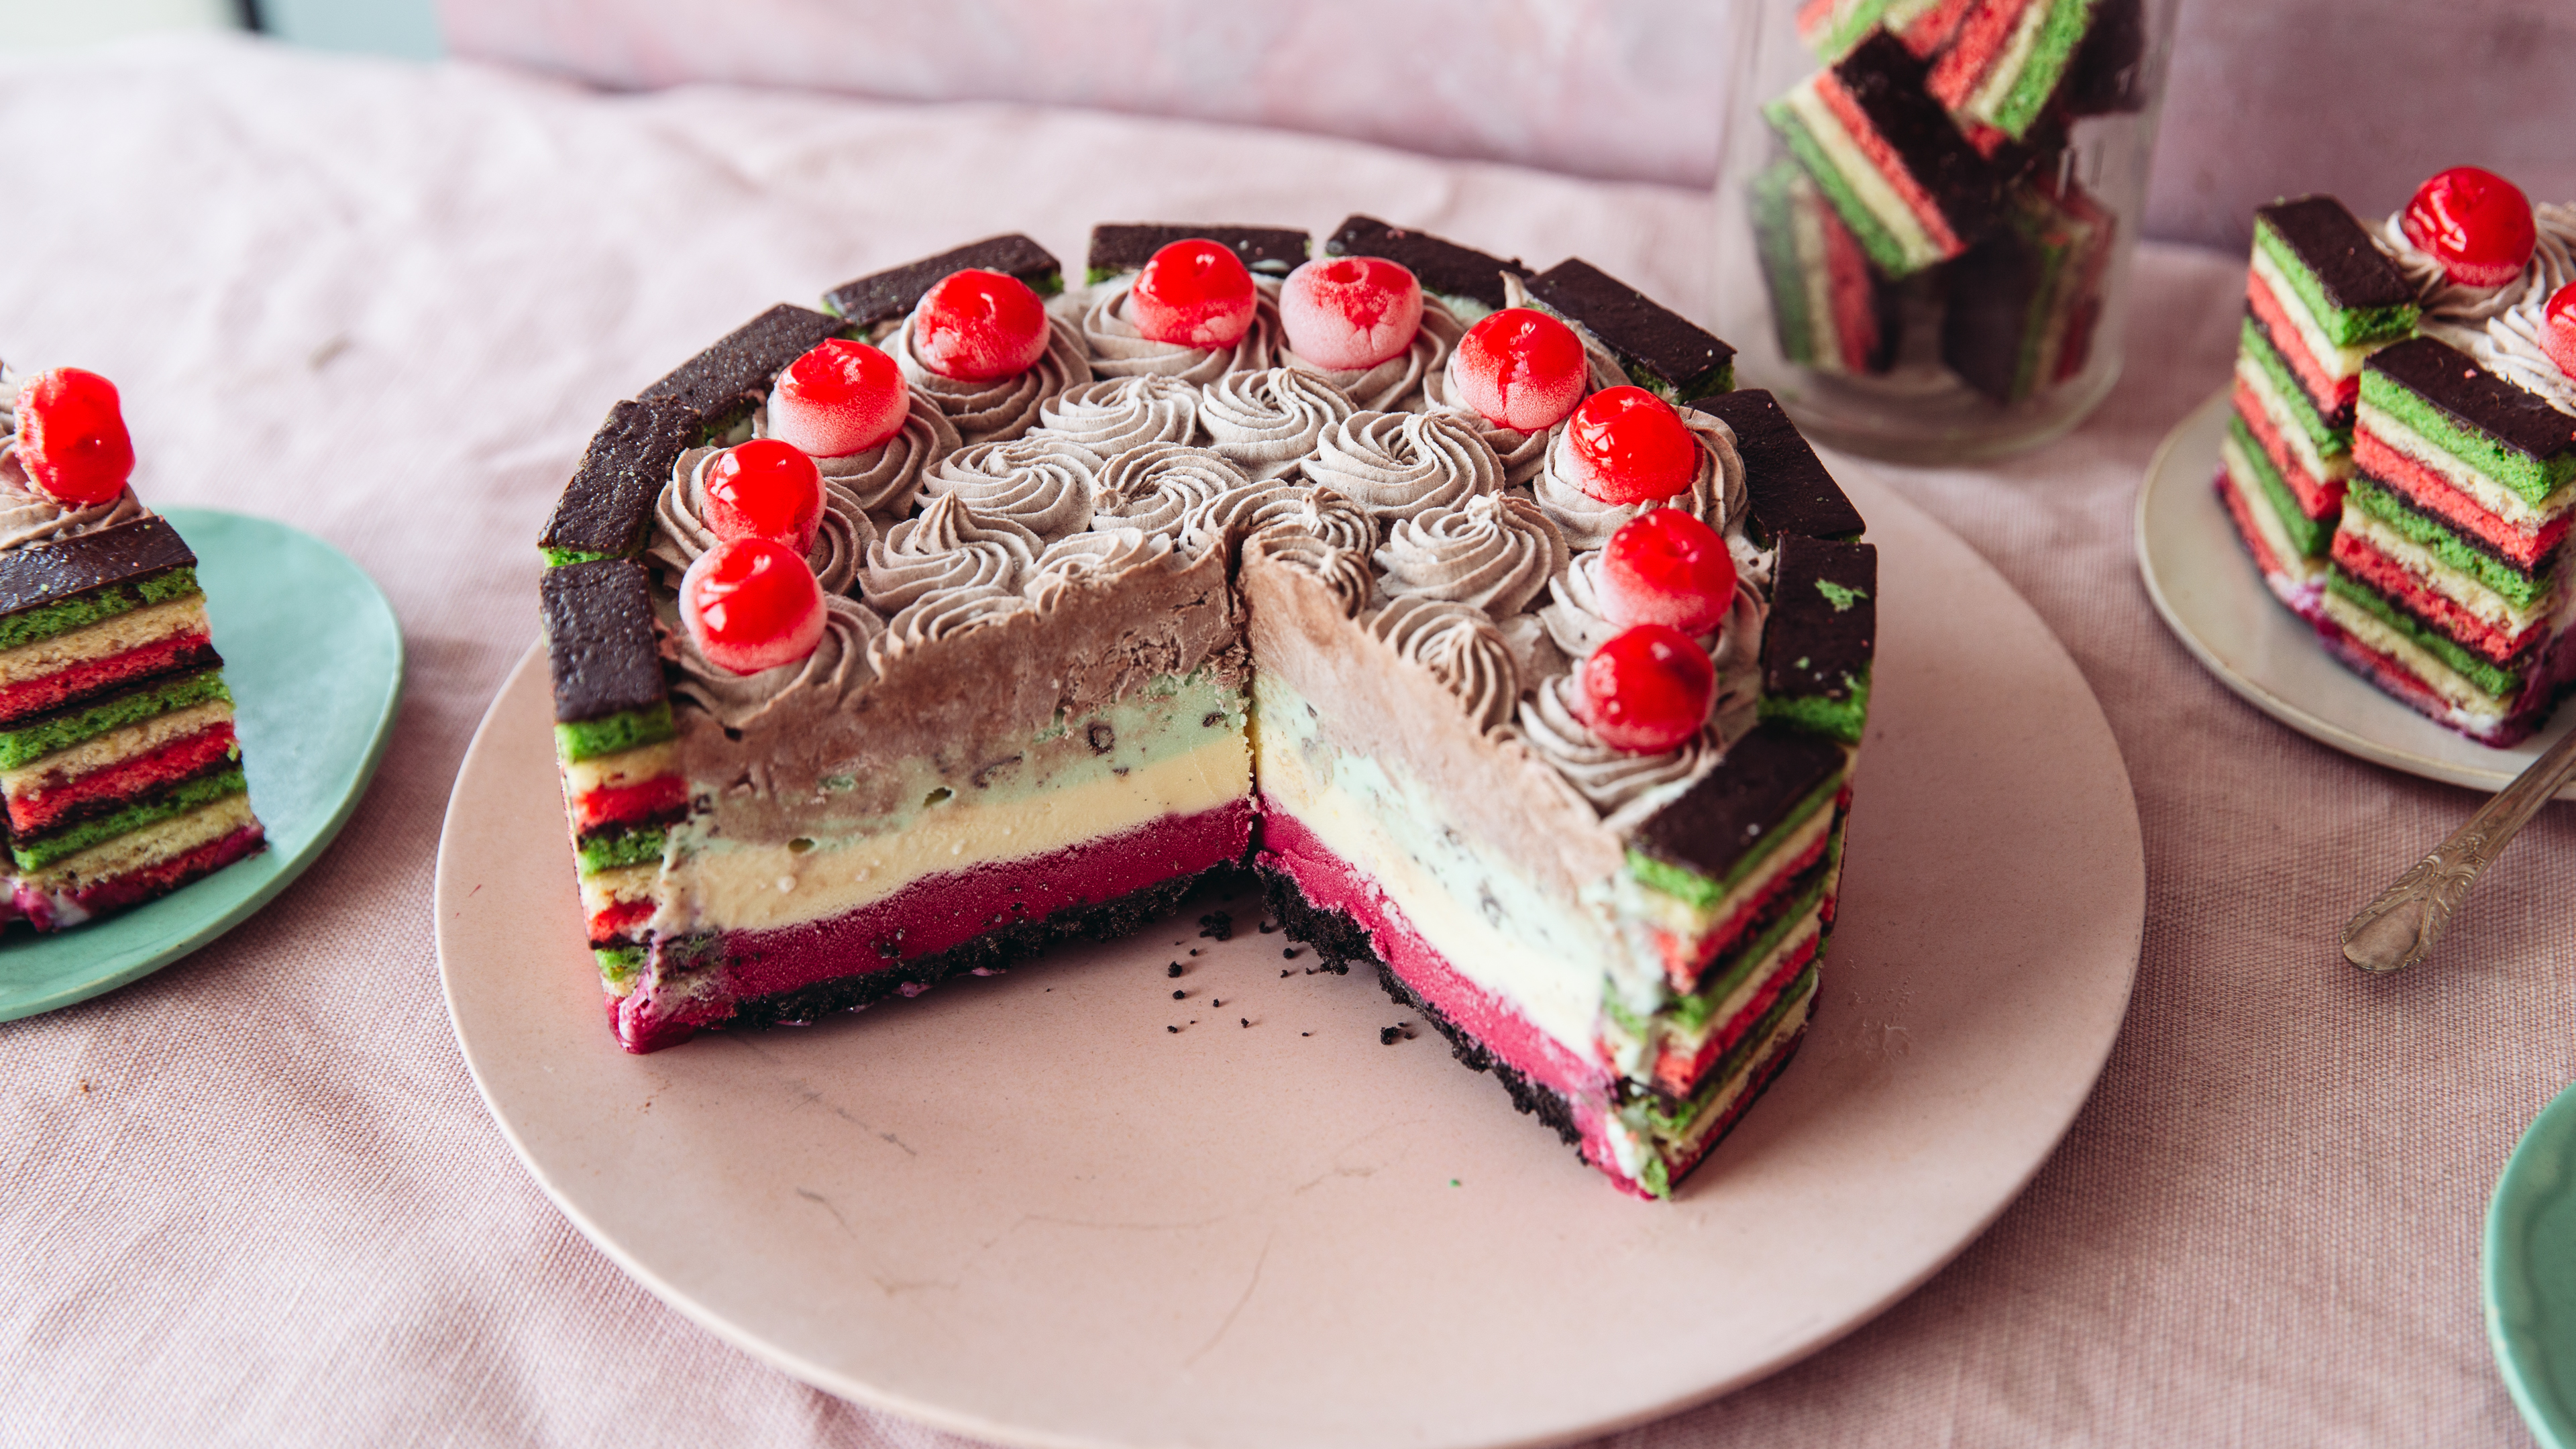 Best Ice Cream Cake Ever - Coco Cake Land - Cake Tutorials, Cake ...